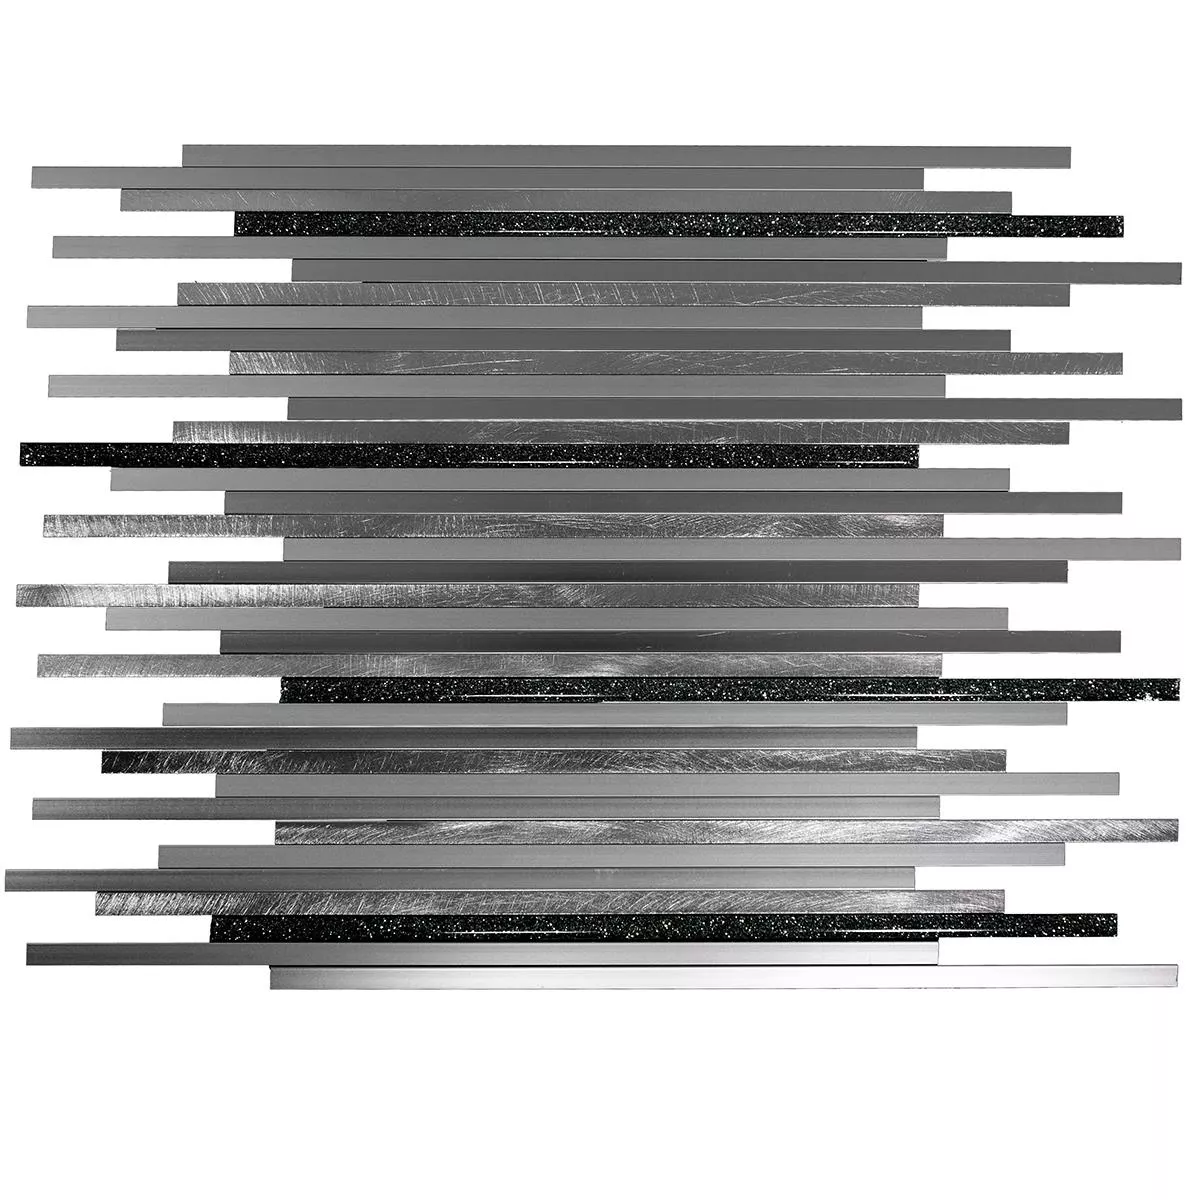 Auminio Metal Azulejos De Mosaico Bilbao Stripes Negro